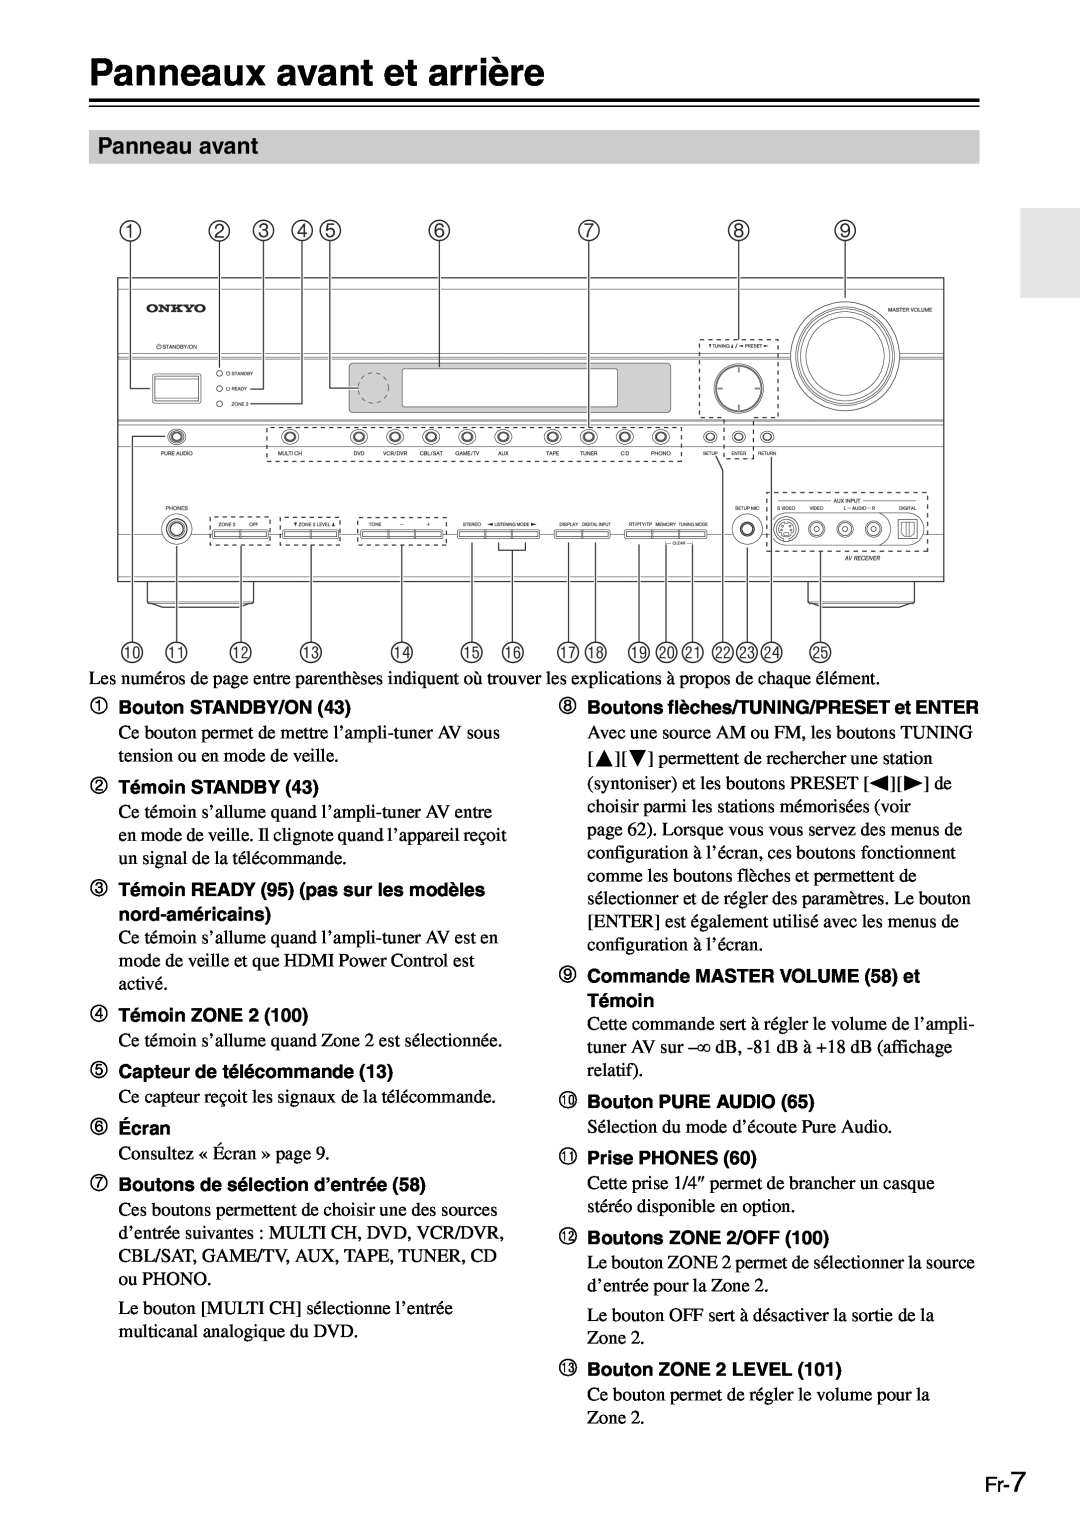 Onkyo TX-SR705 manual Panneaux avant et arrière, bk bl, bp bq 